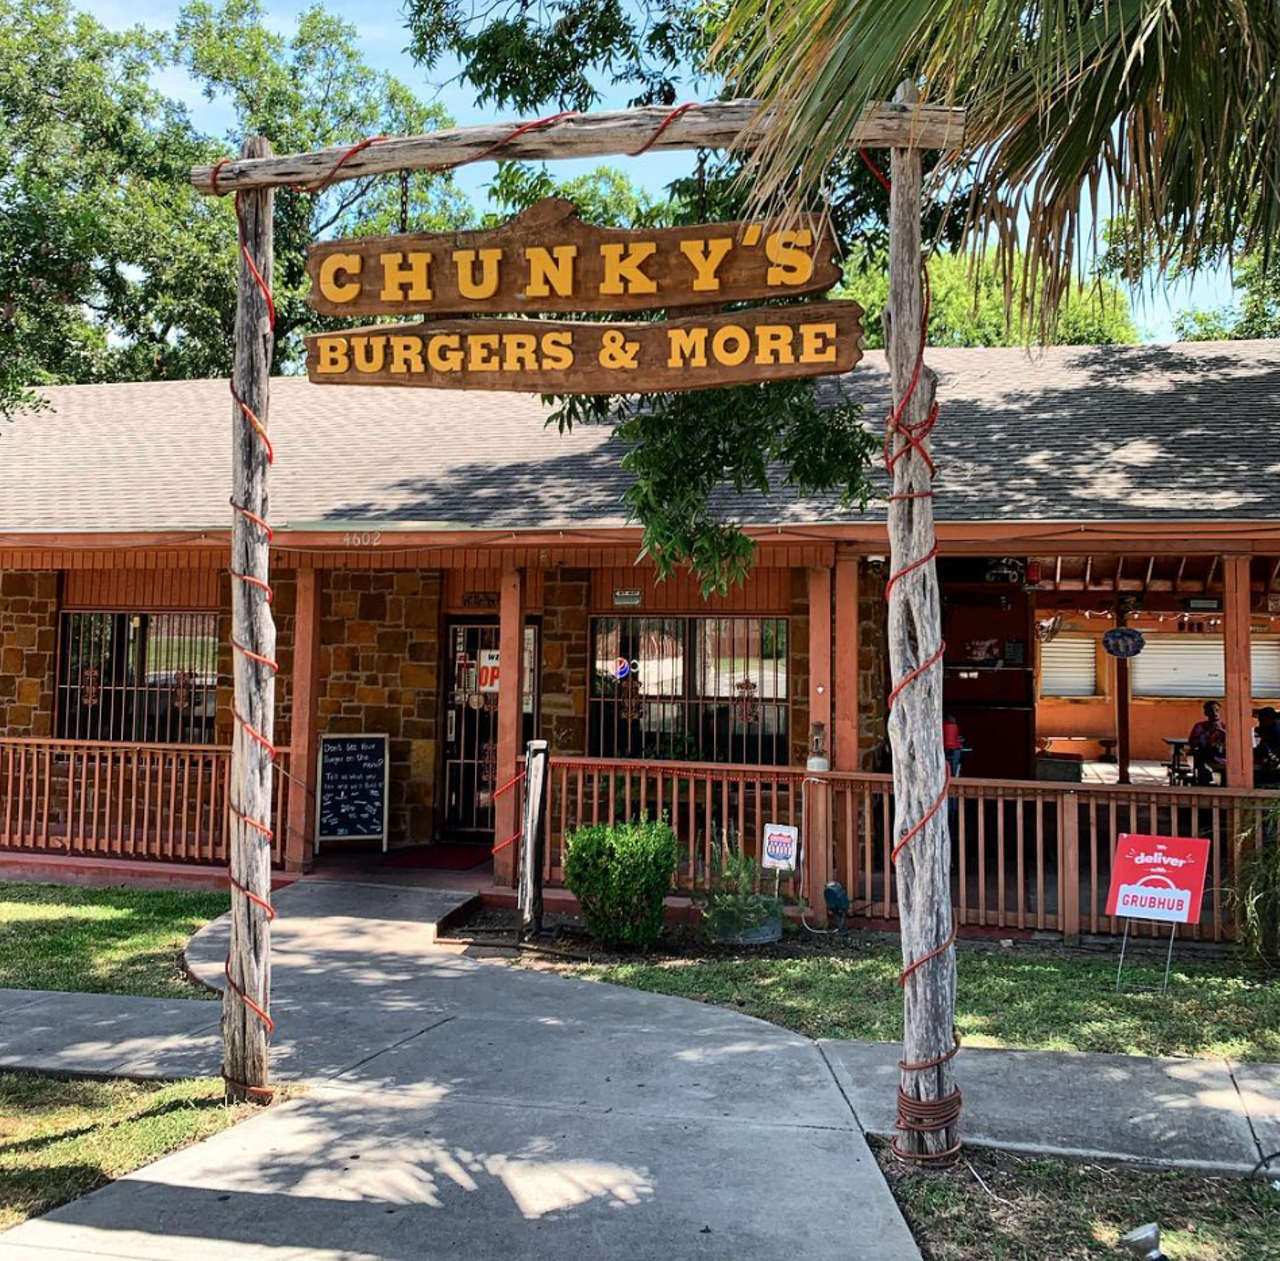 Chunky’s Burgers
4602 Callaghan Road, (210) 433-9960, mychunkysburgers.com
Photo via Instagram / emmaralfaro